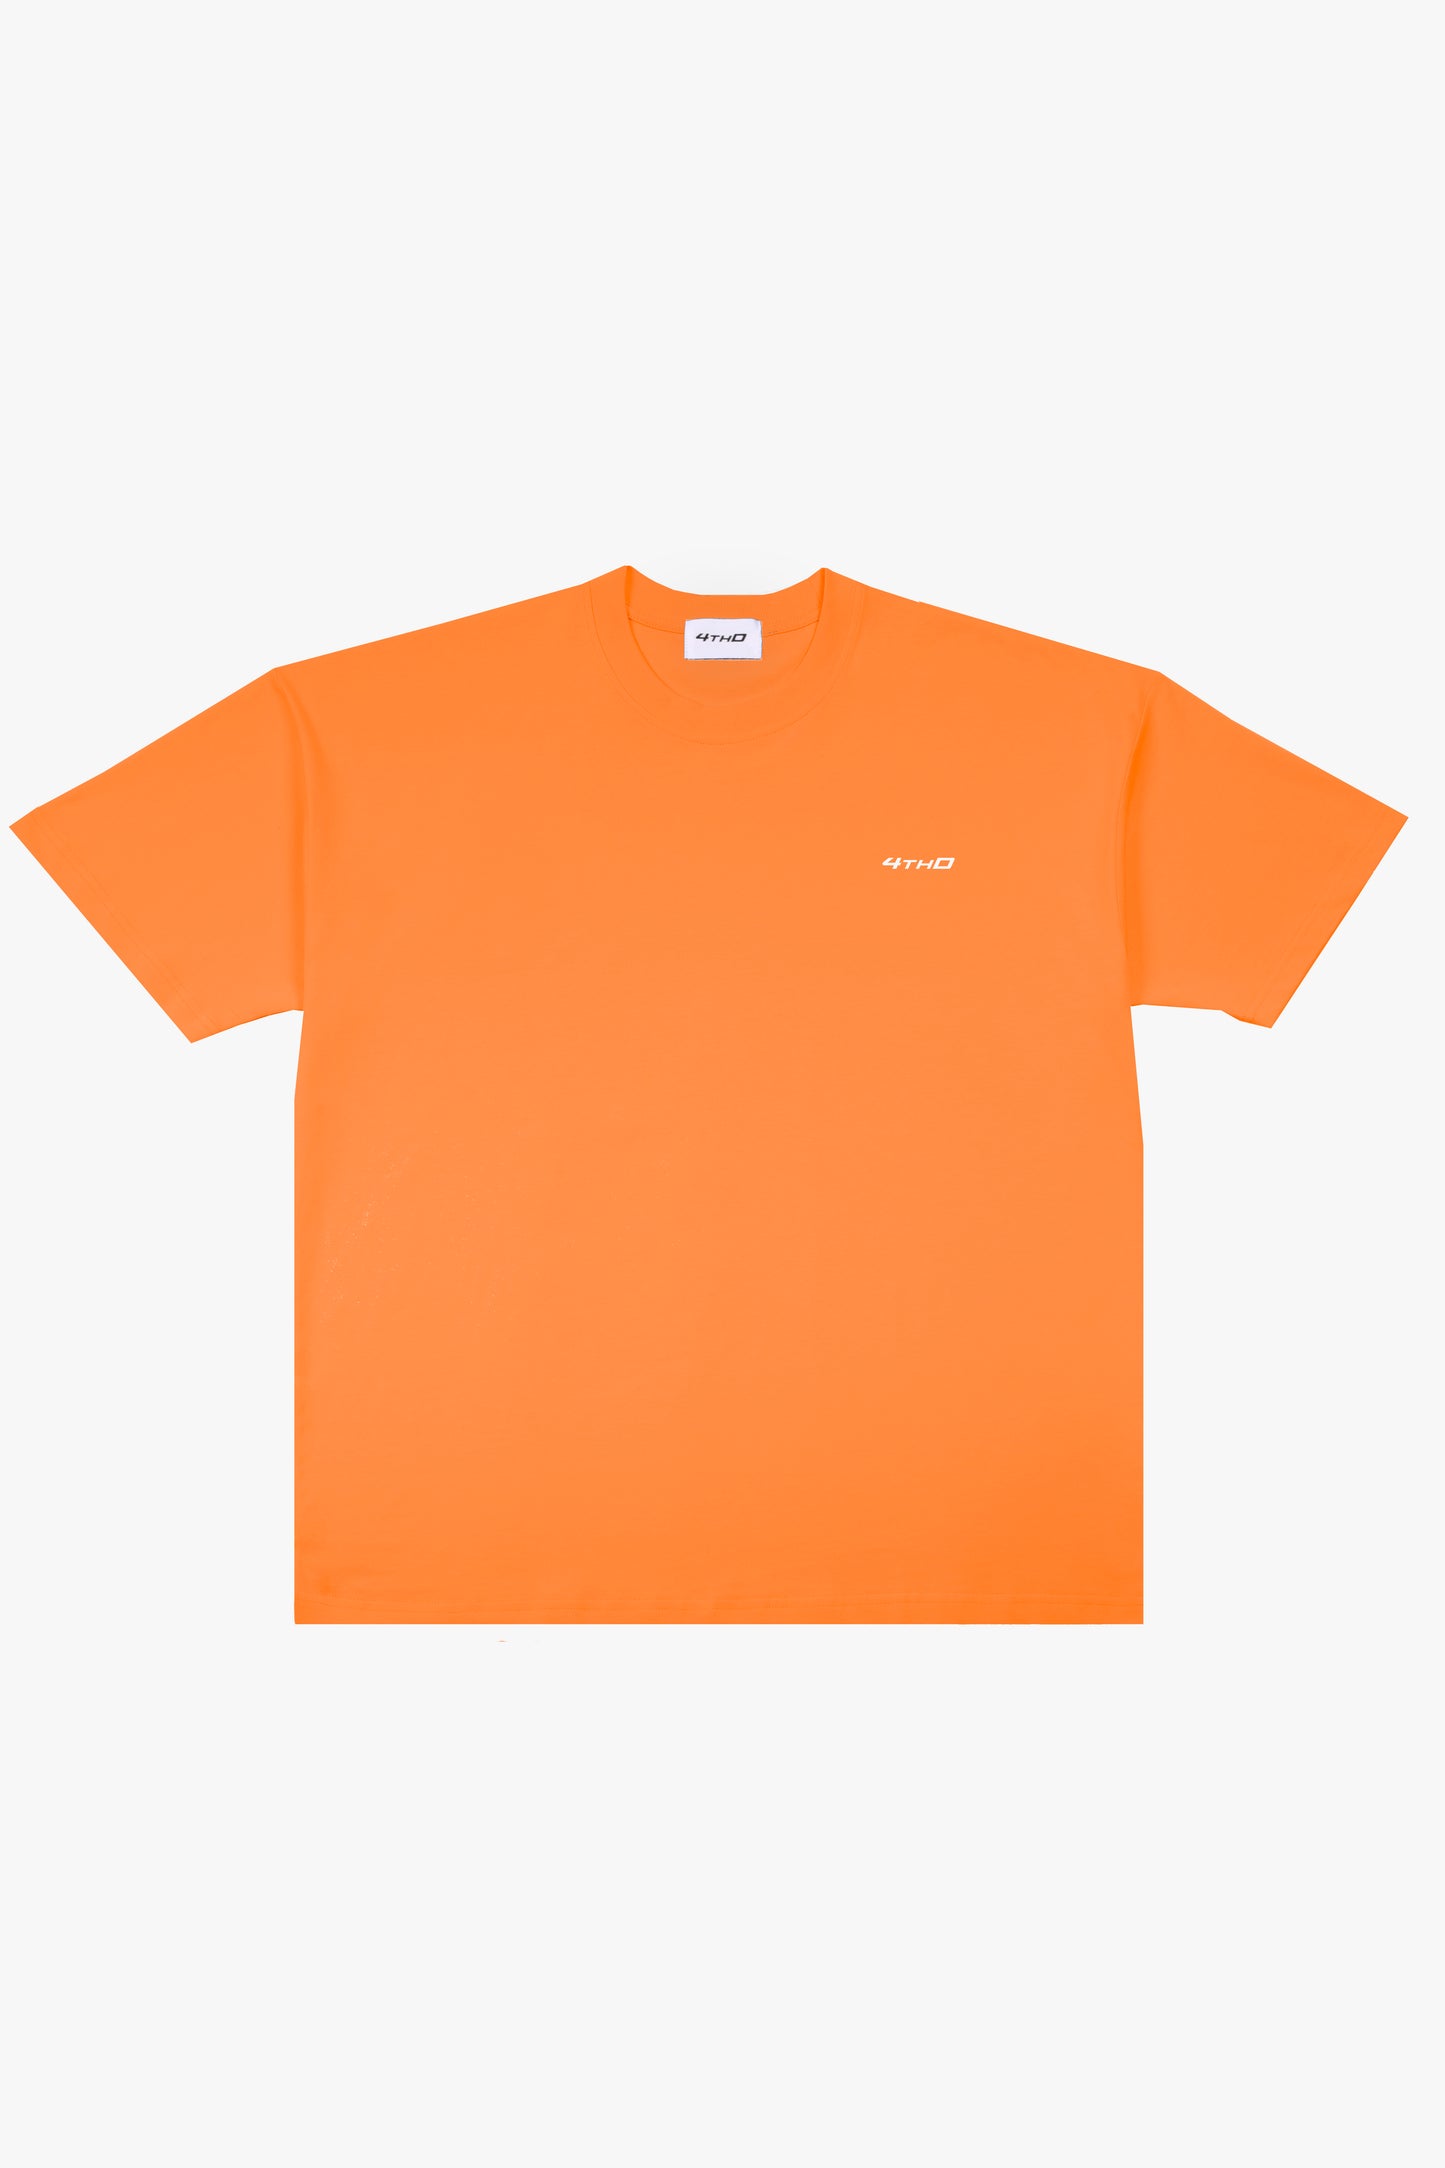 Colors Shirt - Orange